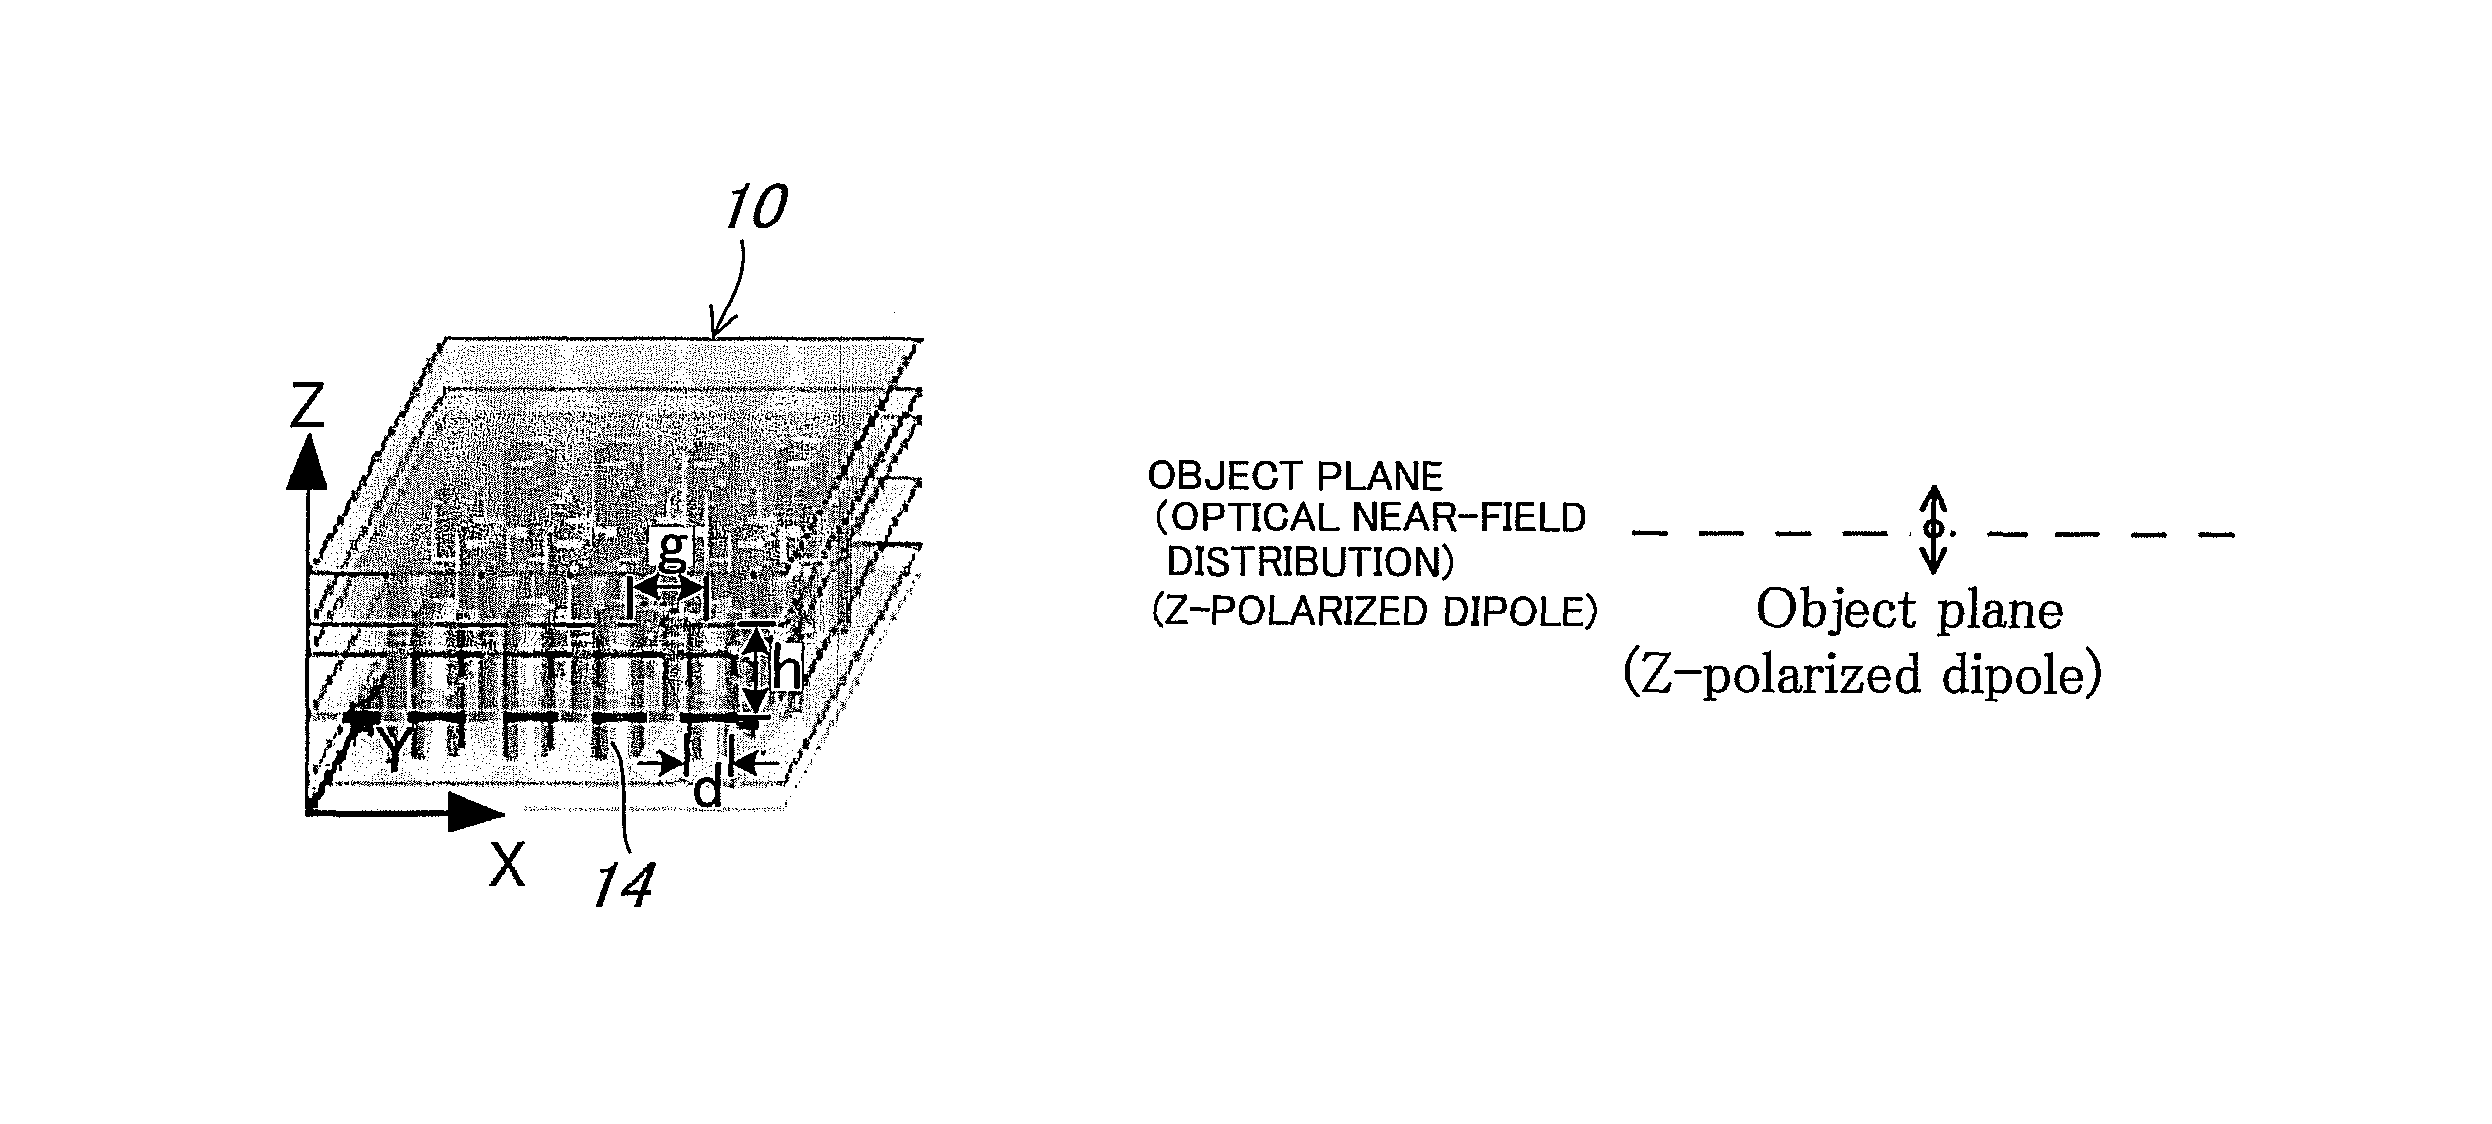 Optical near-field distribution transfer device